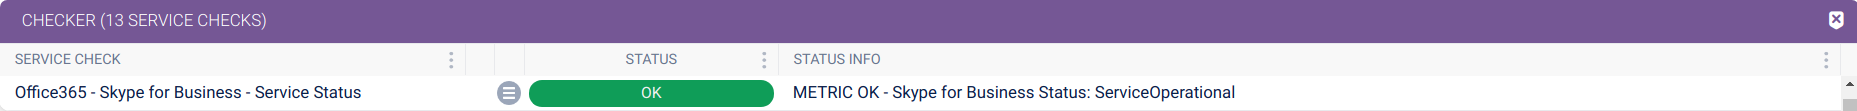 Office 365 Skype Service Checks